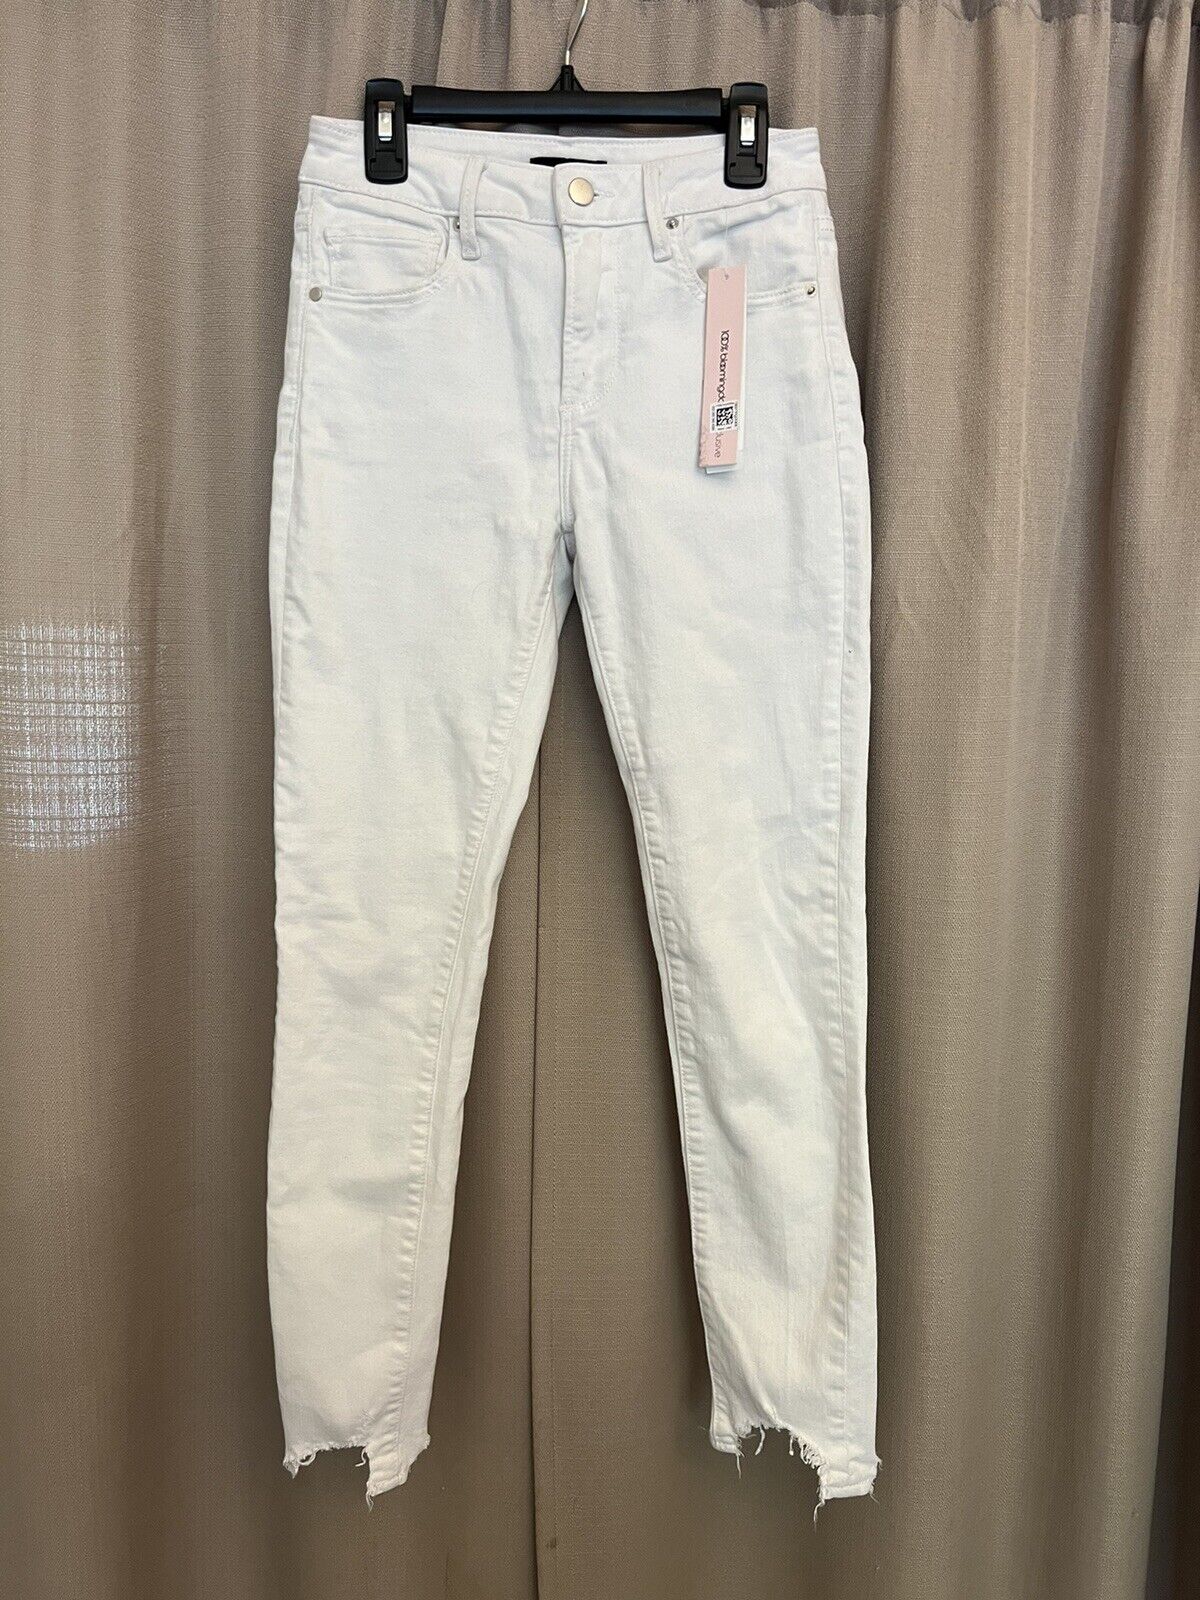 White Skinny Jeans Aqua 27(smaller)